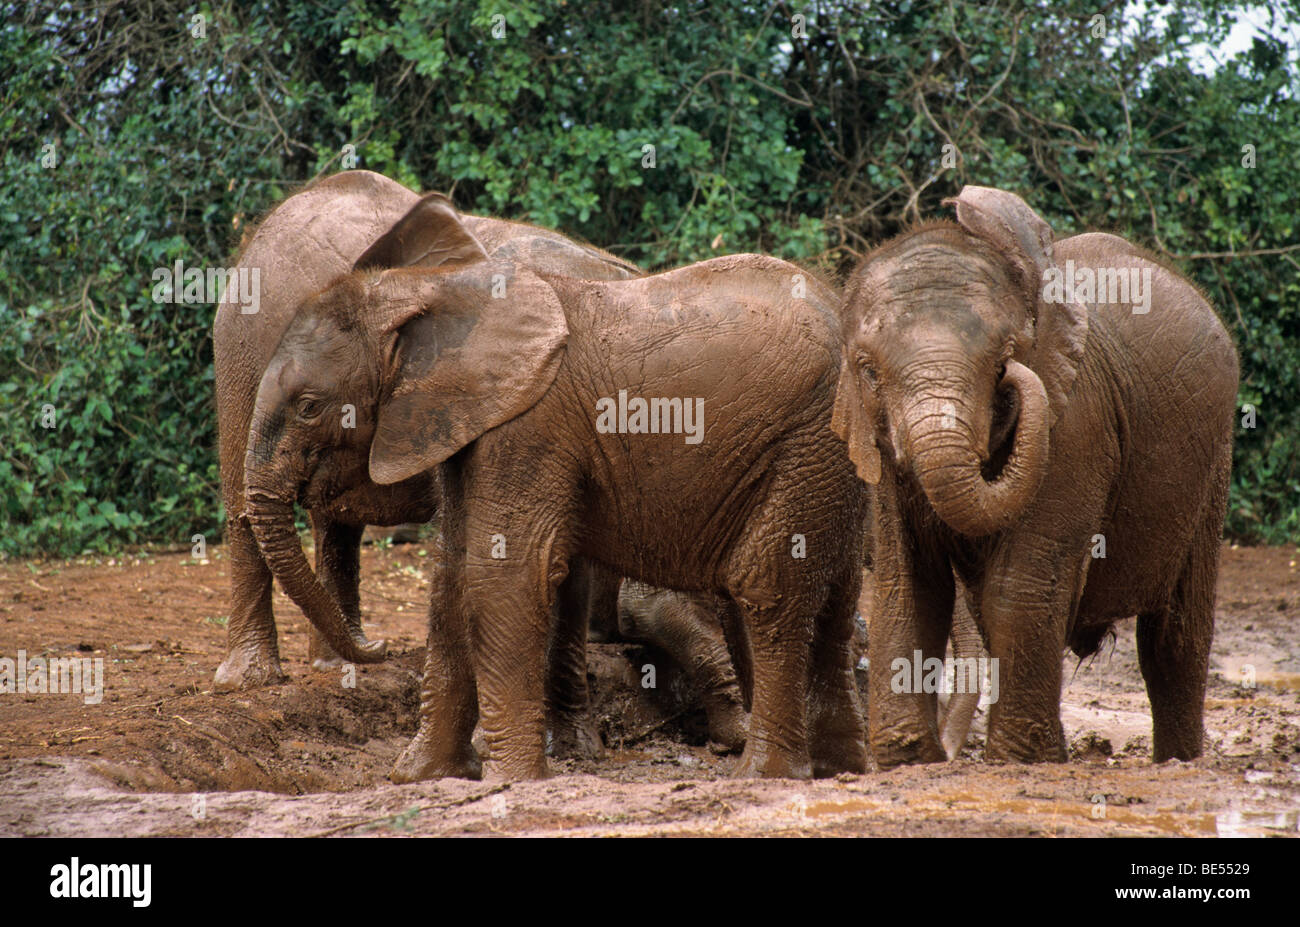 Giovane elefante africano (Loxodonta africana), Sheldrick's l'Orfanotrofio degli Elefanti, un orfanotrofio per elefanti, Nairobi parco giochi, Kenya, Afr Foto Stock